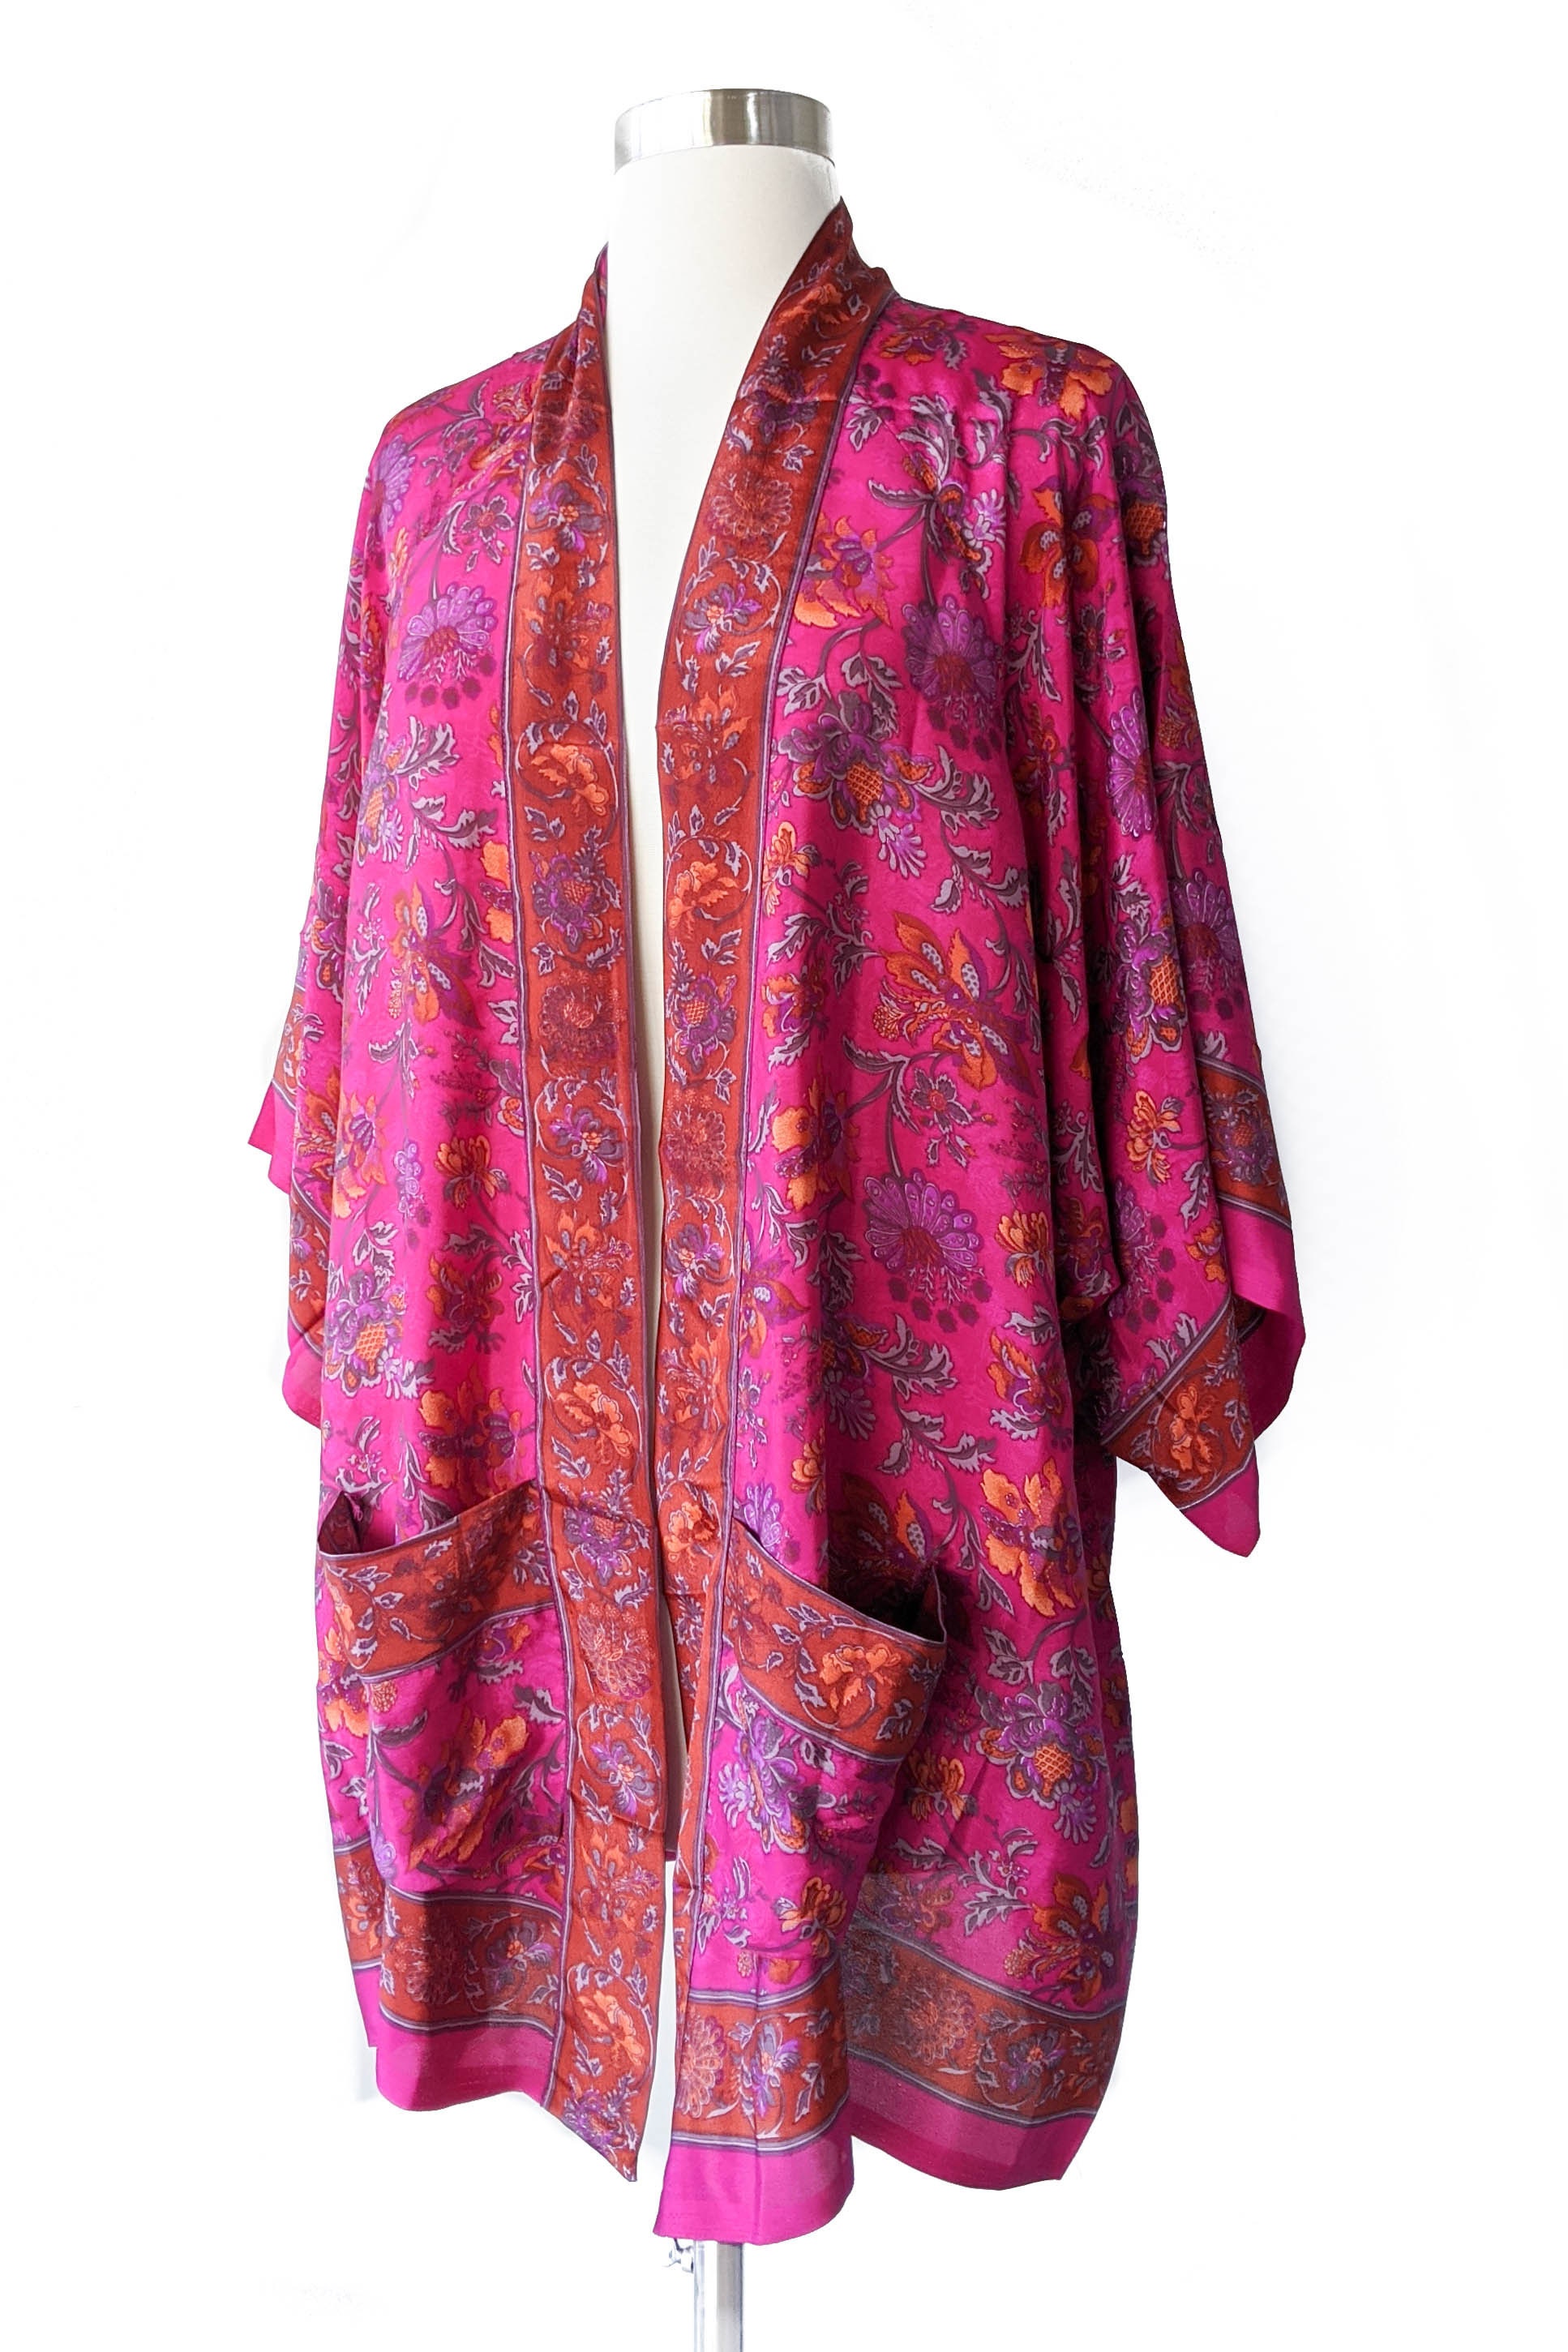 Hot Pink Romantic Kimono Robe Long Bell Sleeves Batwing | Etsy